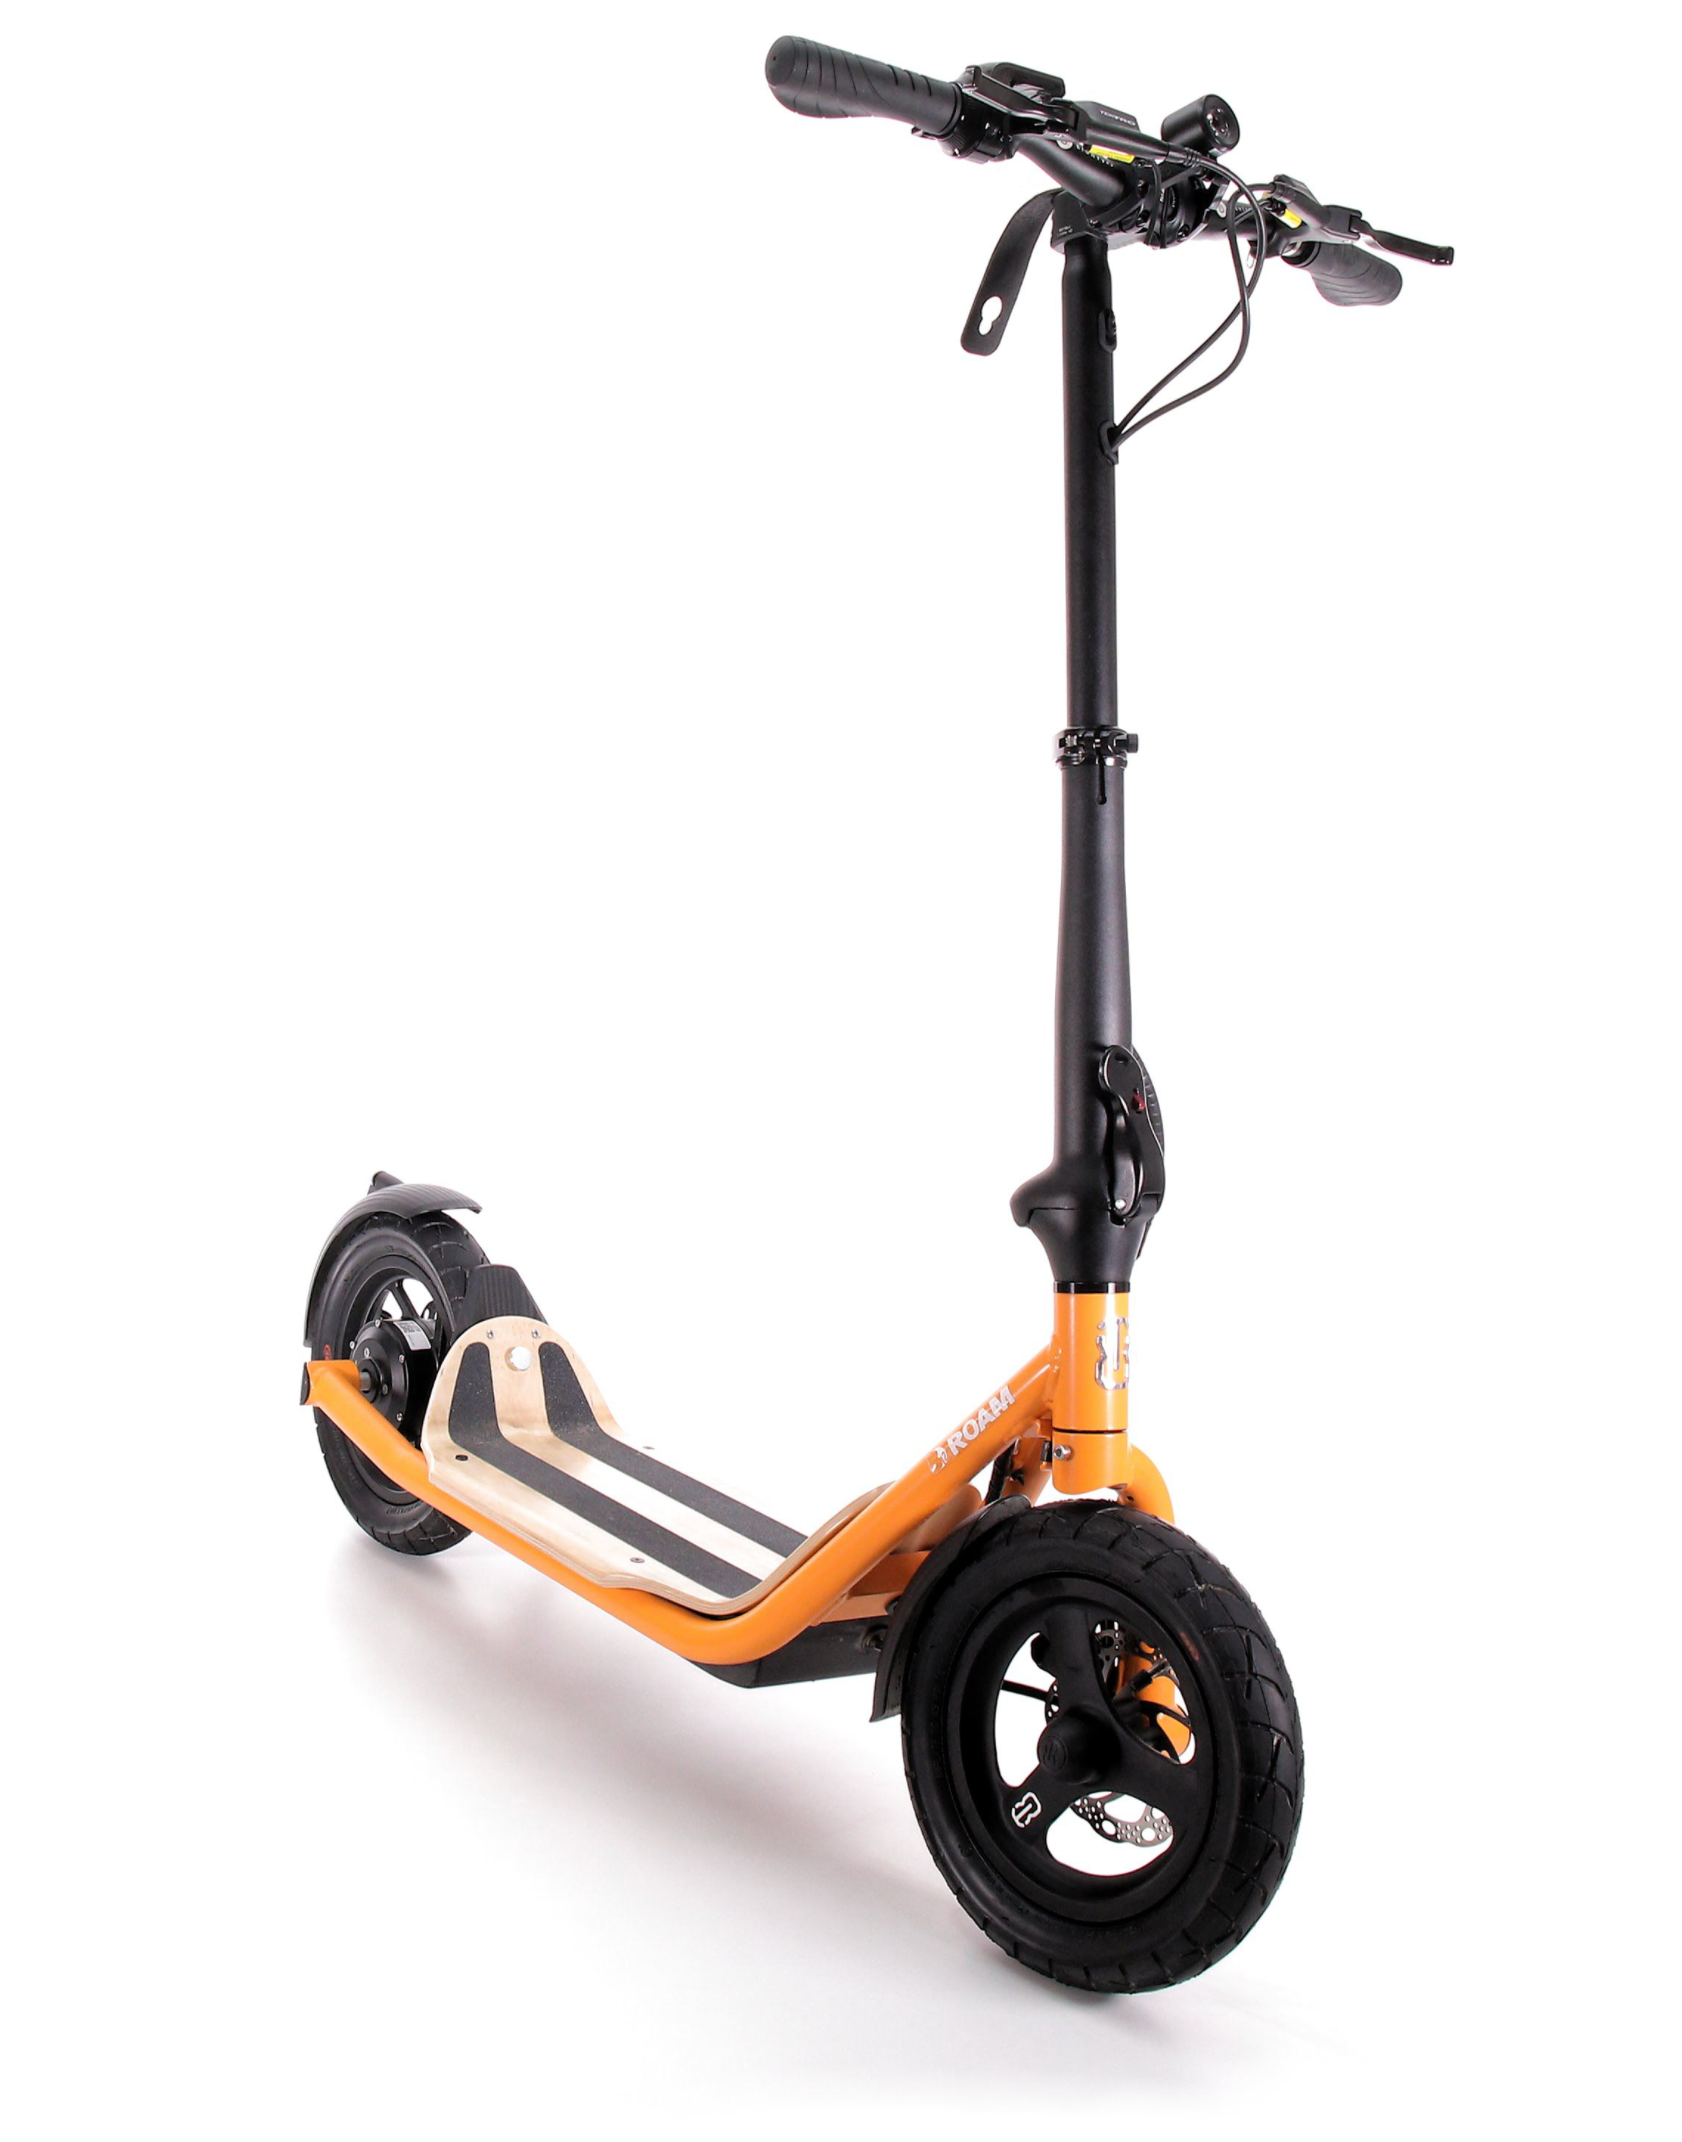 8Tev B12- Roam Electric Scooter